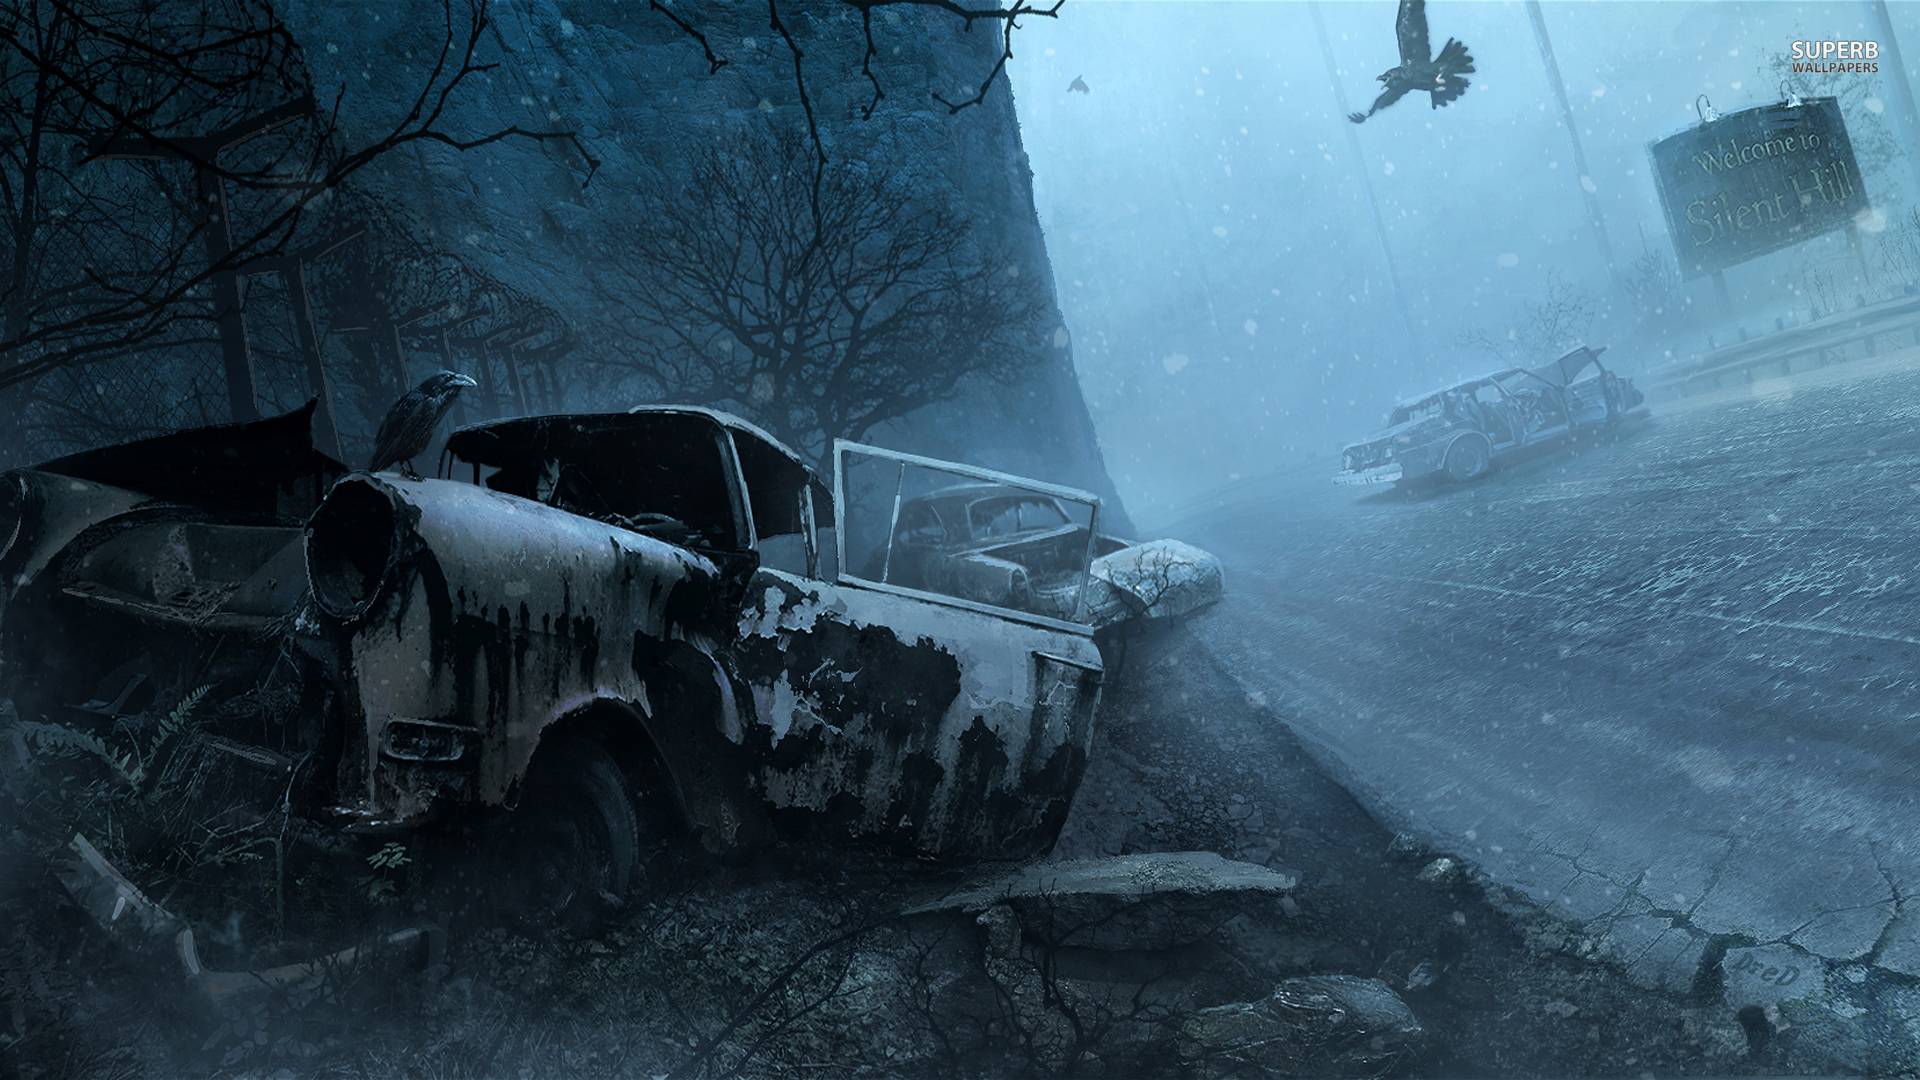  Silent Hill Hintergrundbild 1920x1080. 